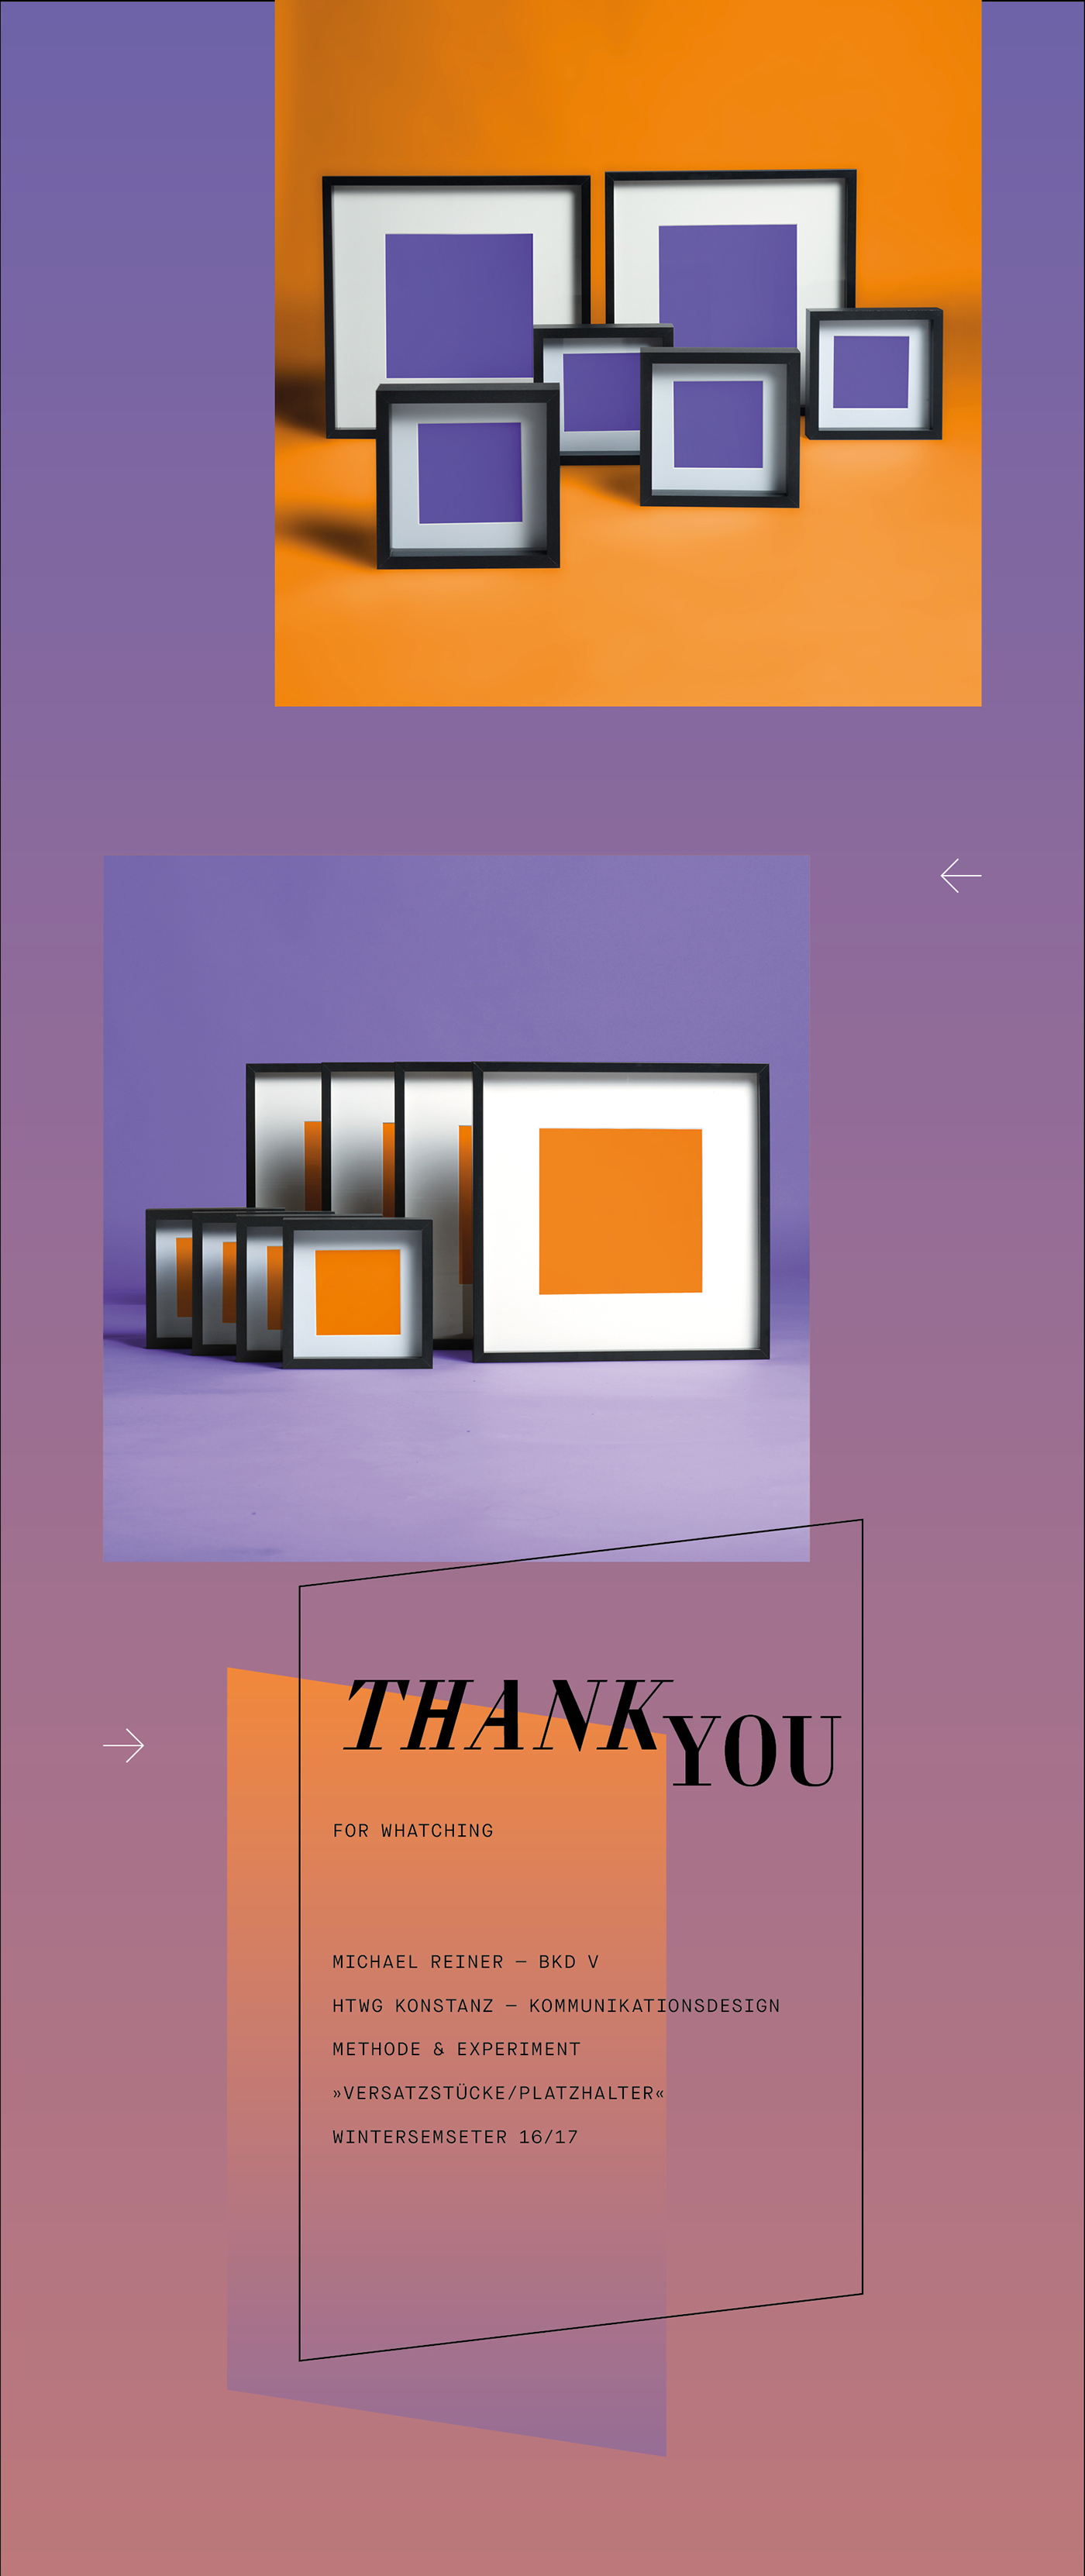 #HTWG #Verlauf #orange #violett #ikea   #frame #quadrat #studio #montage  